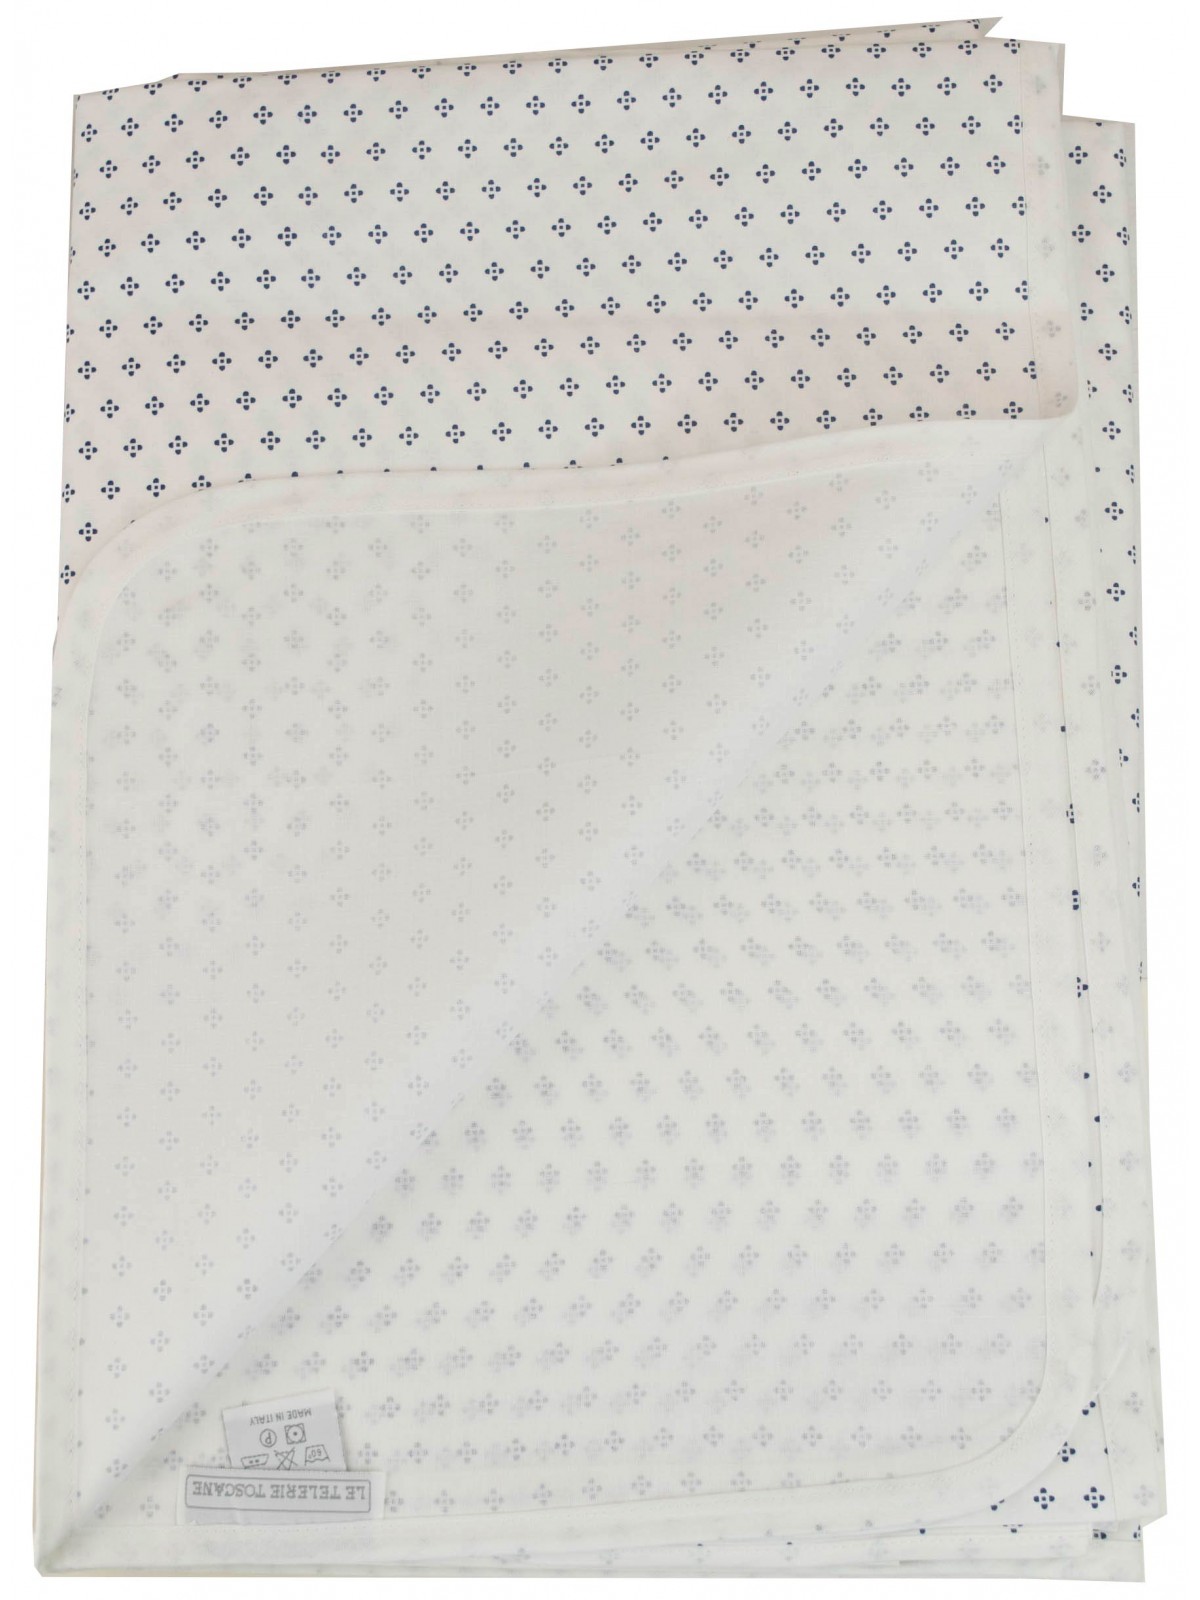 Rechthoekig tafelkleed x12 White Shabby Fantasy 270x180 +12 servetten